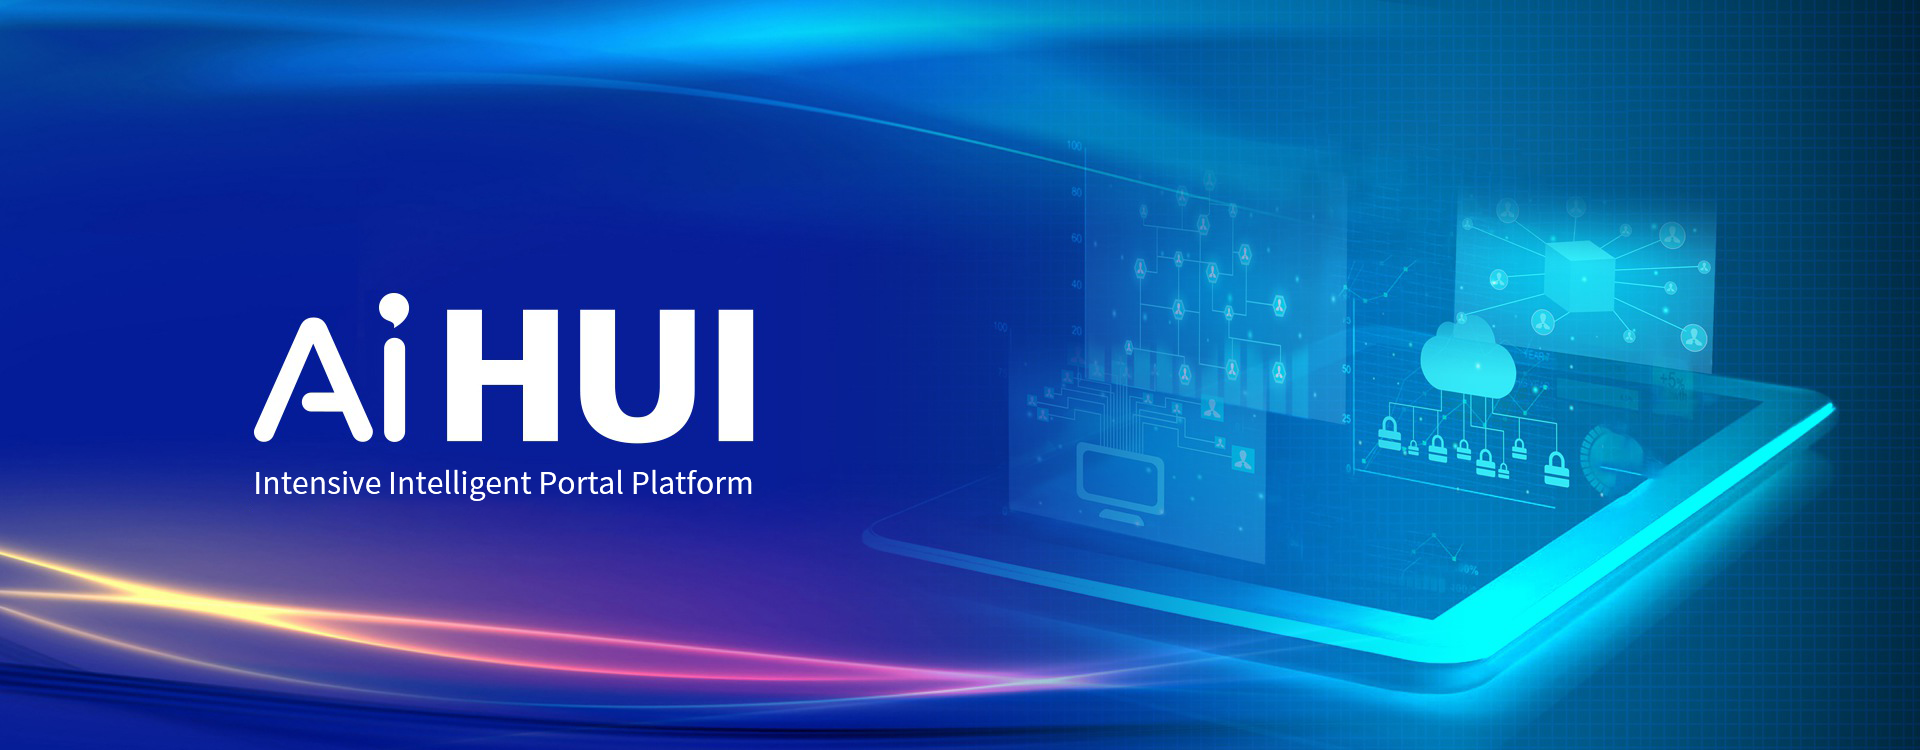 AiHui intensive intelligent portal platform